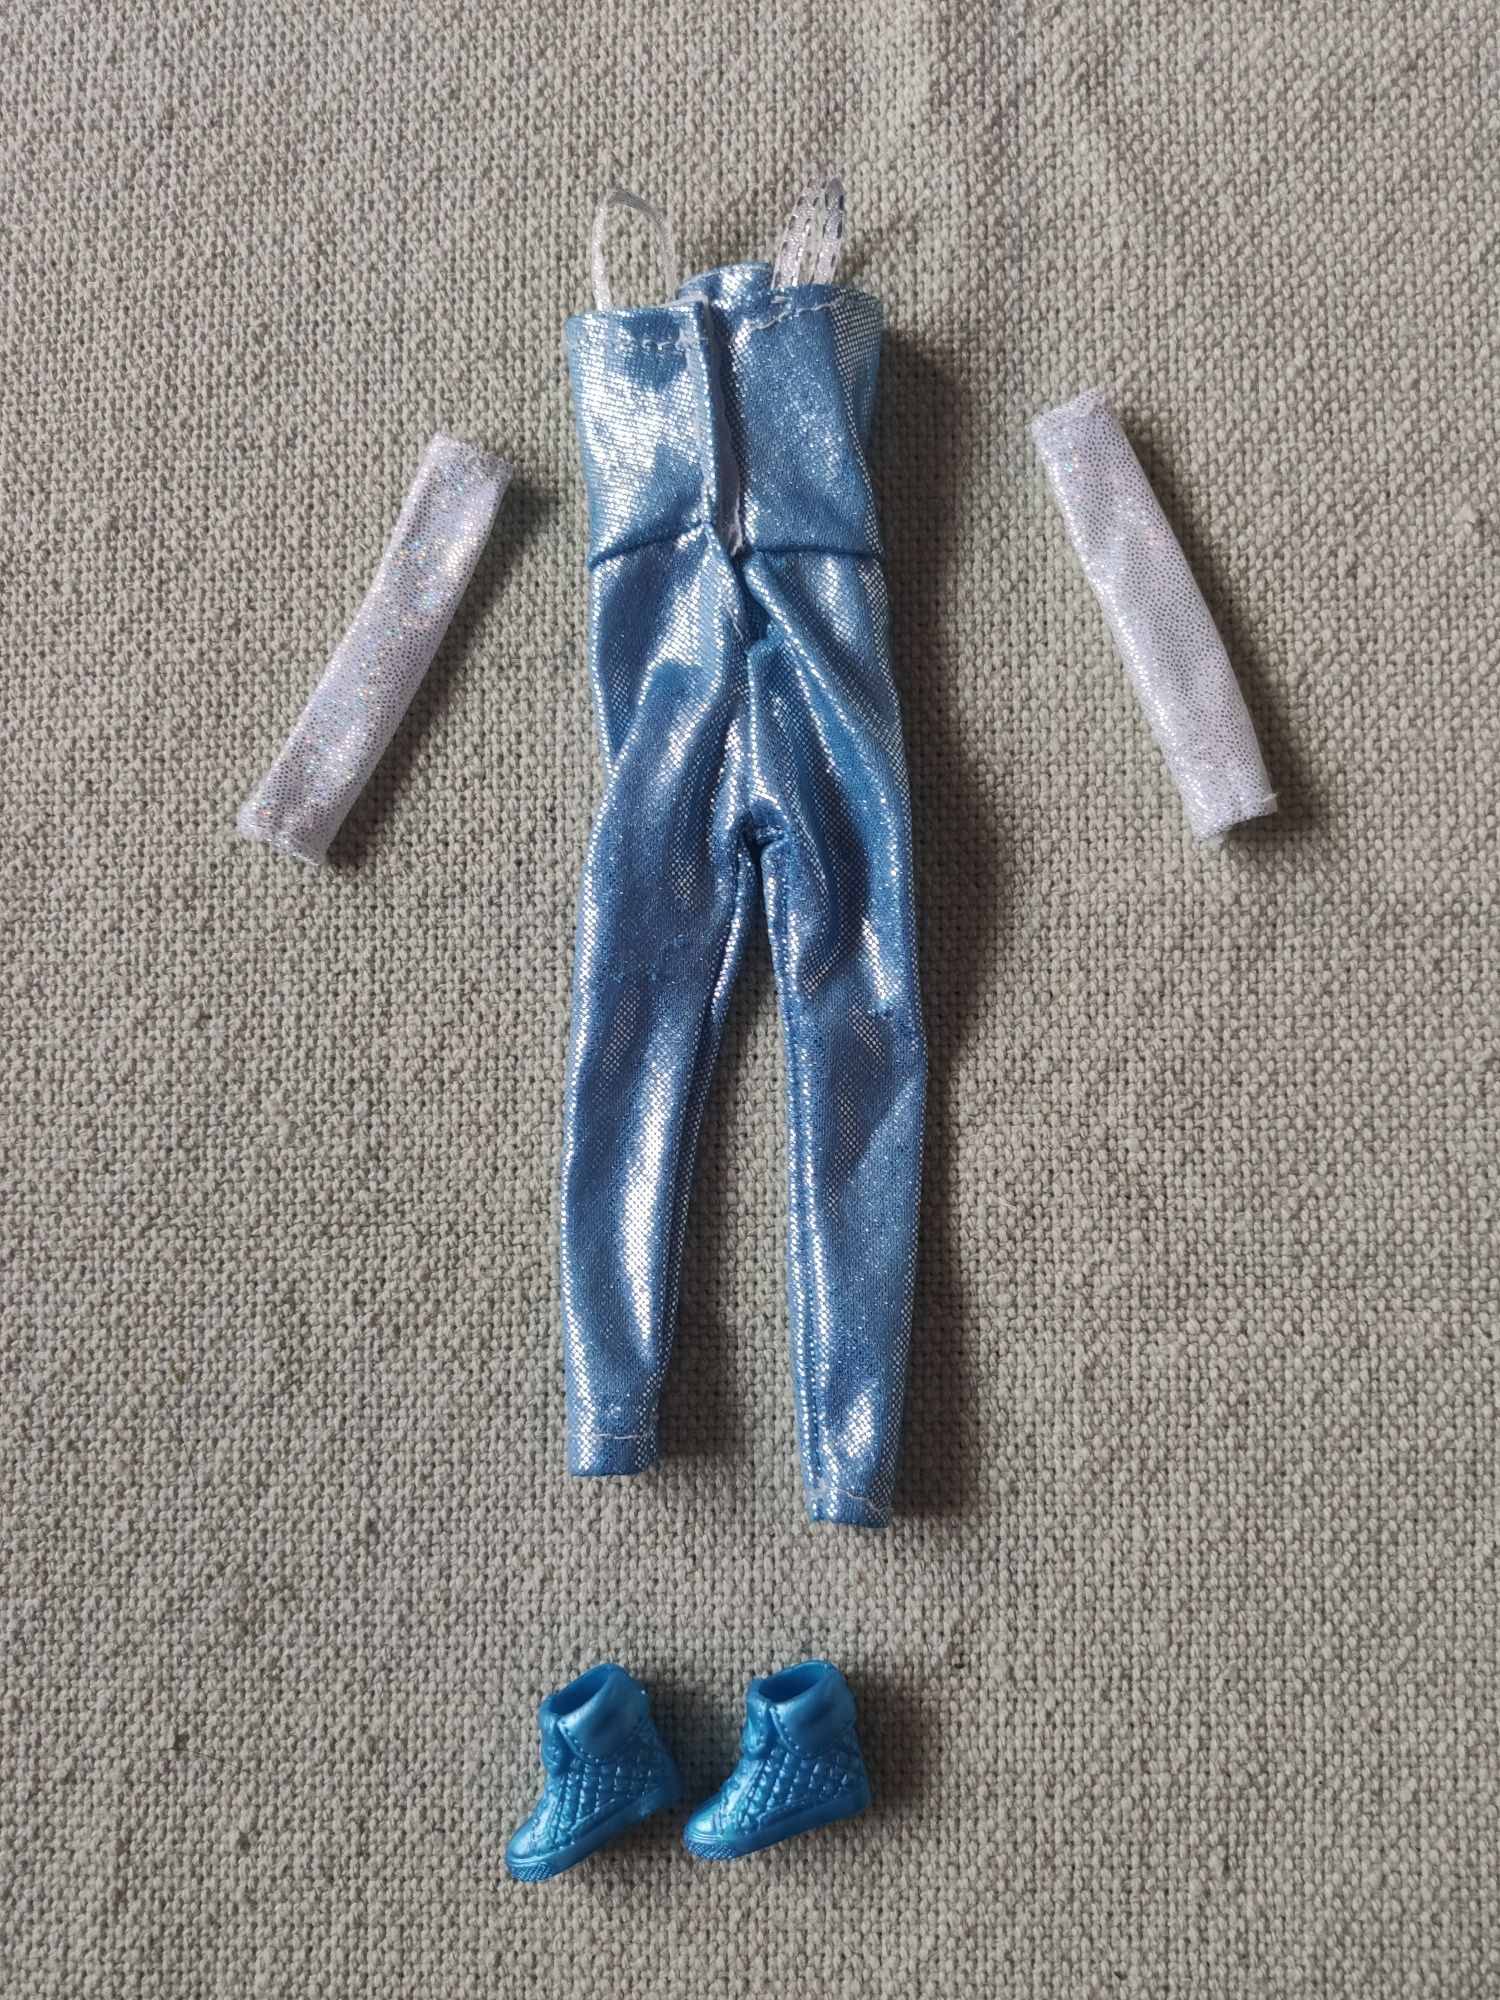 Ubrania dla lalki Barbie